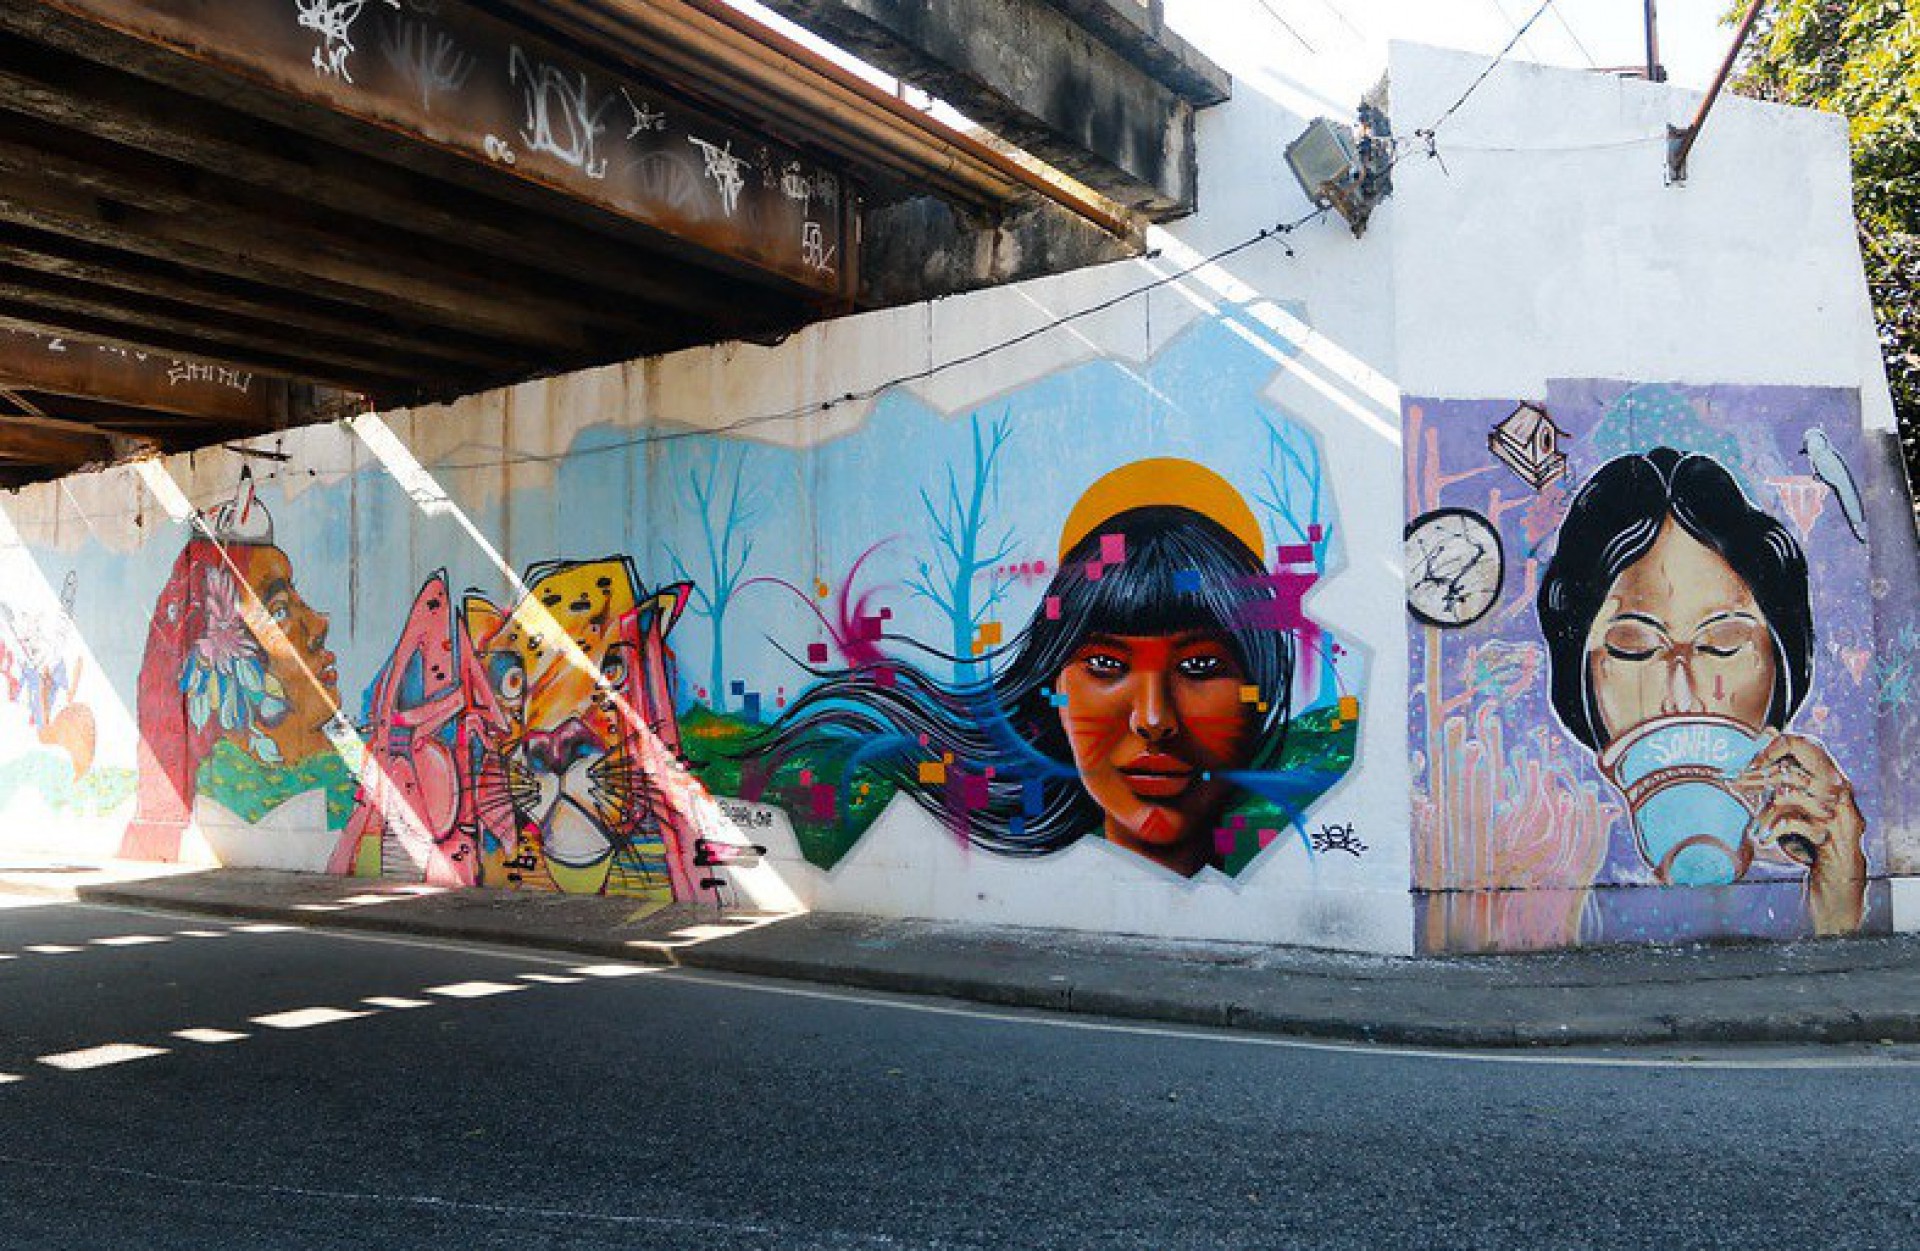 Fotos do mural de grafite feito no viaduto. - Joice Nascimento